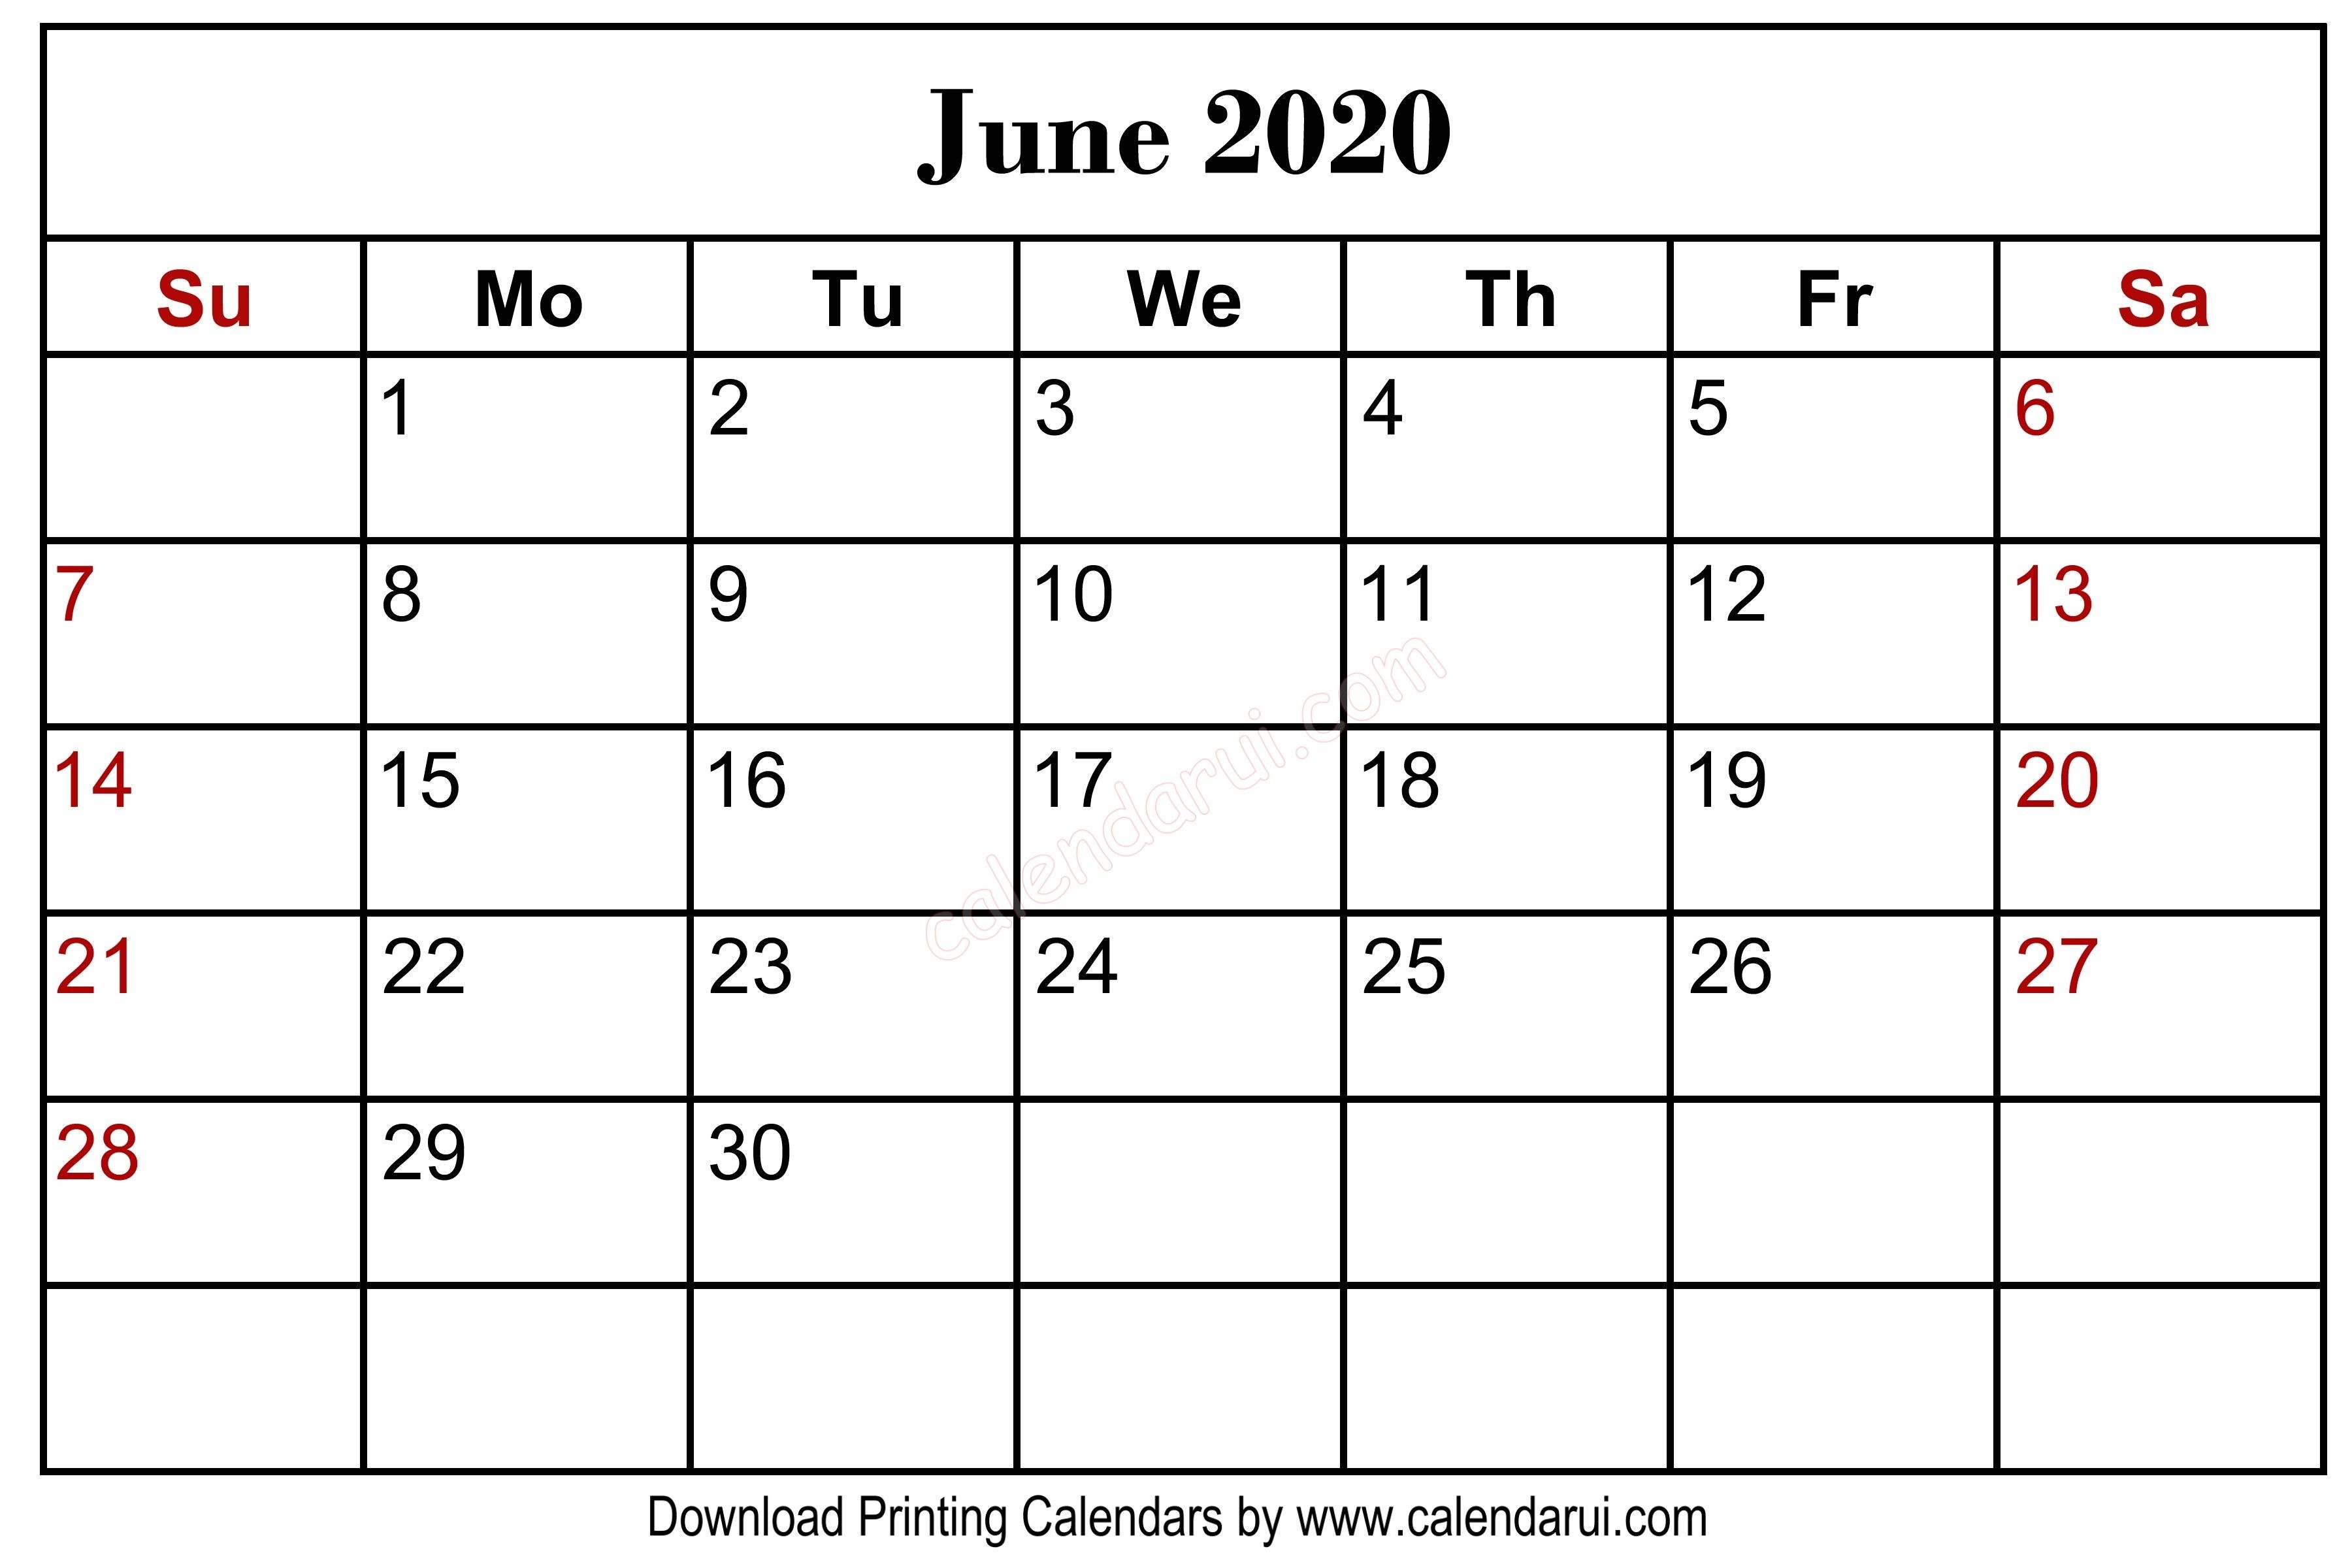 Homepage / 2020 Calendar / June 2020 Blank Calendar-Blank Customizable June Calendar Template 2020